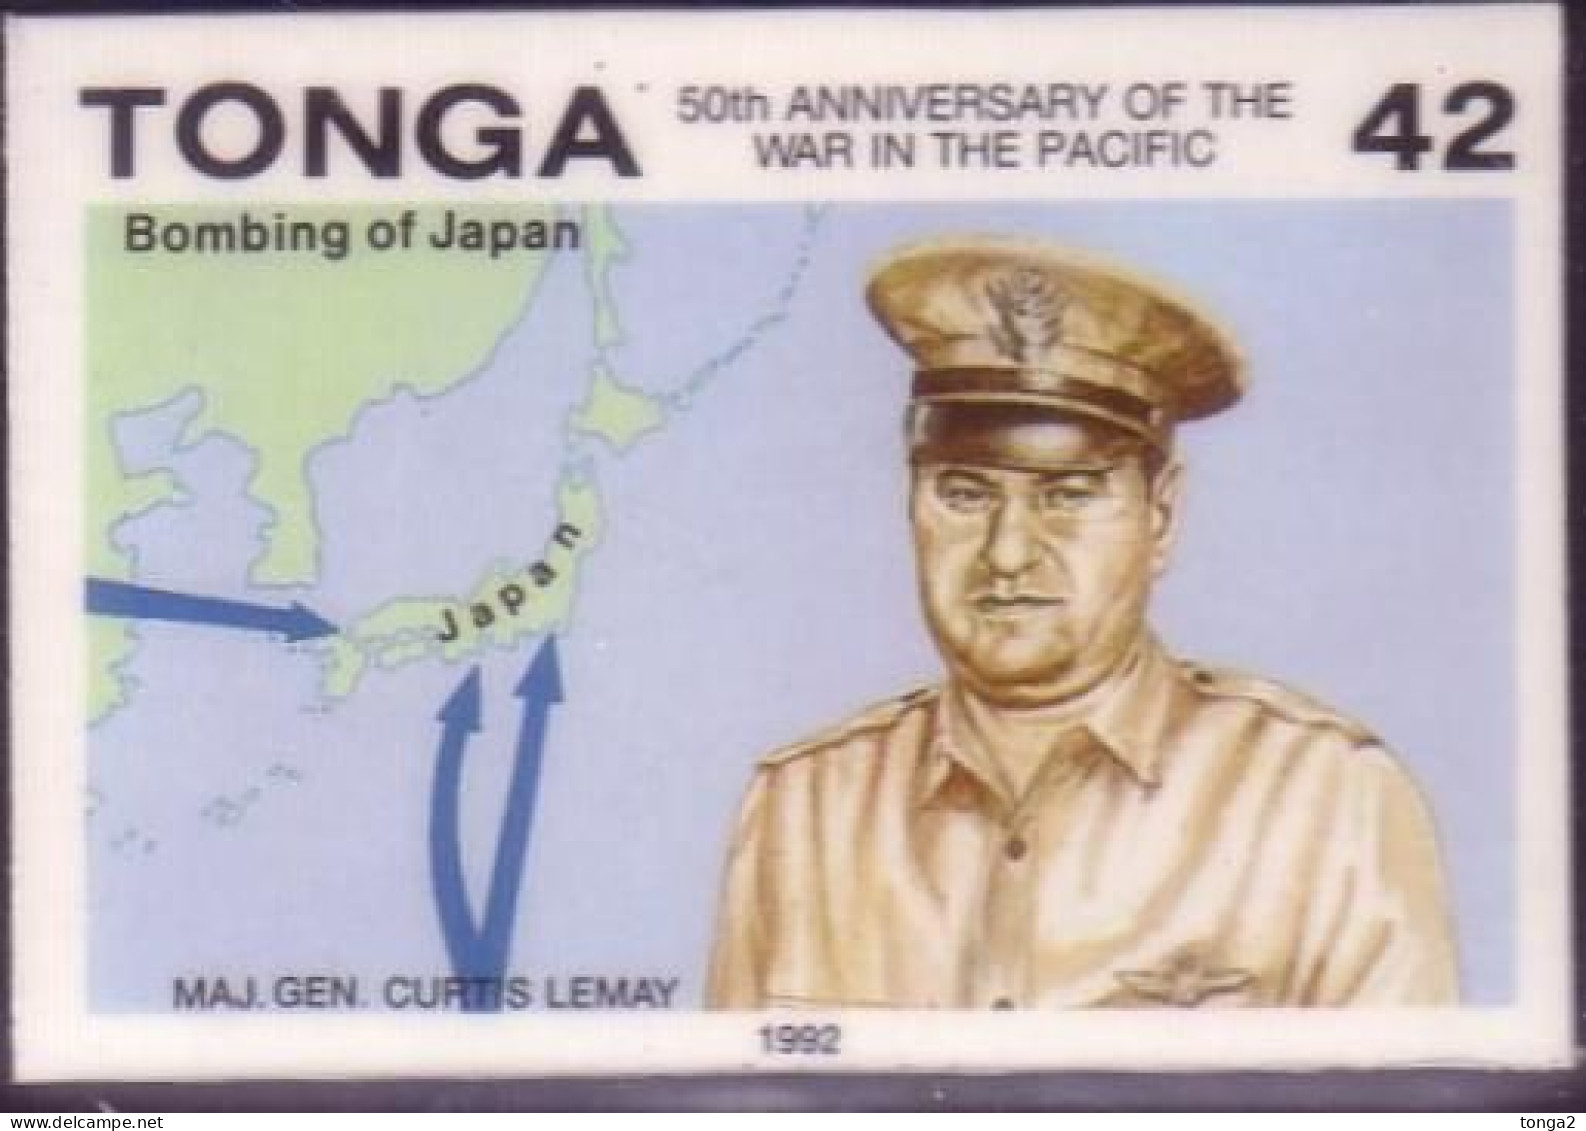 TONGA 1992 Cromalin Proof - Bombing Of Japan, Maj Gen Lemay - War Map  - 4 Exist - Tonga (1970-...)